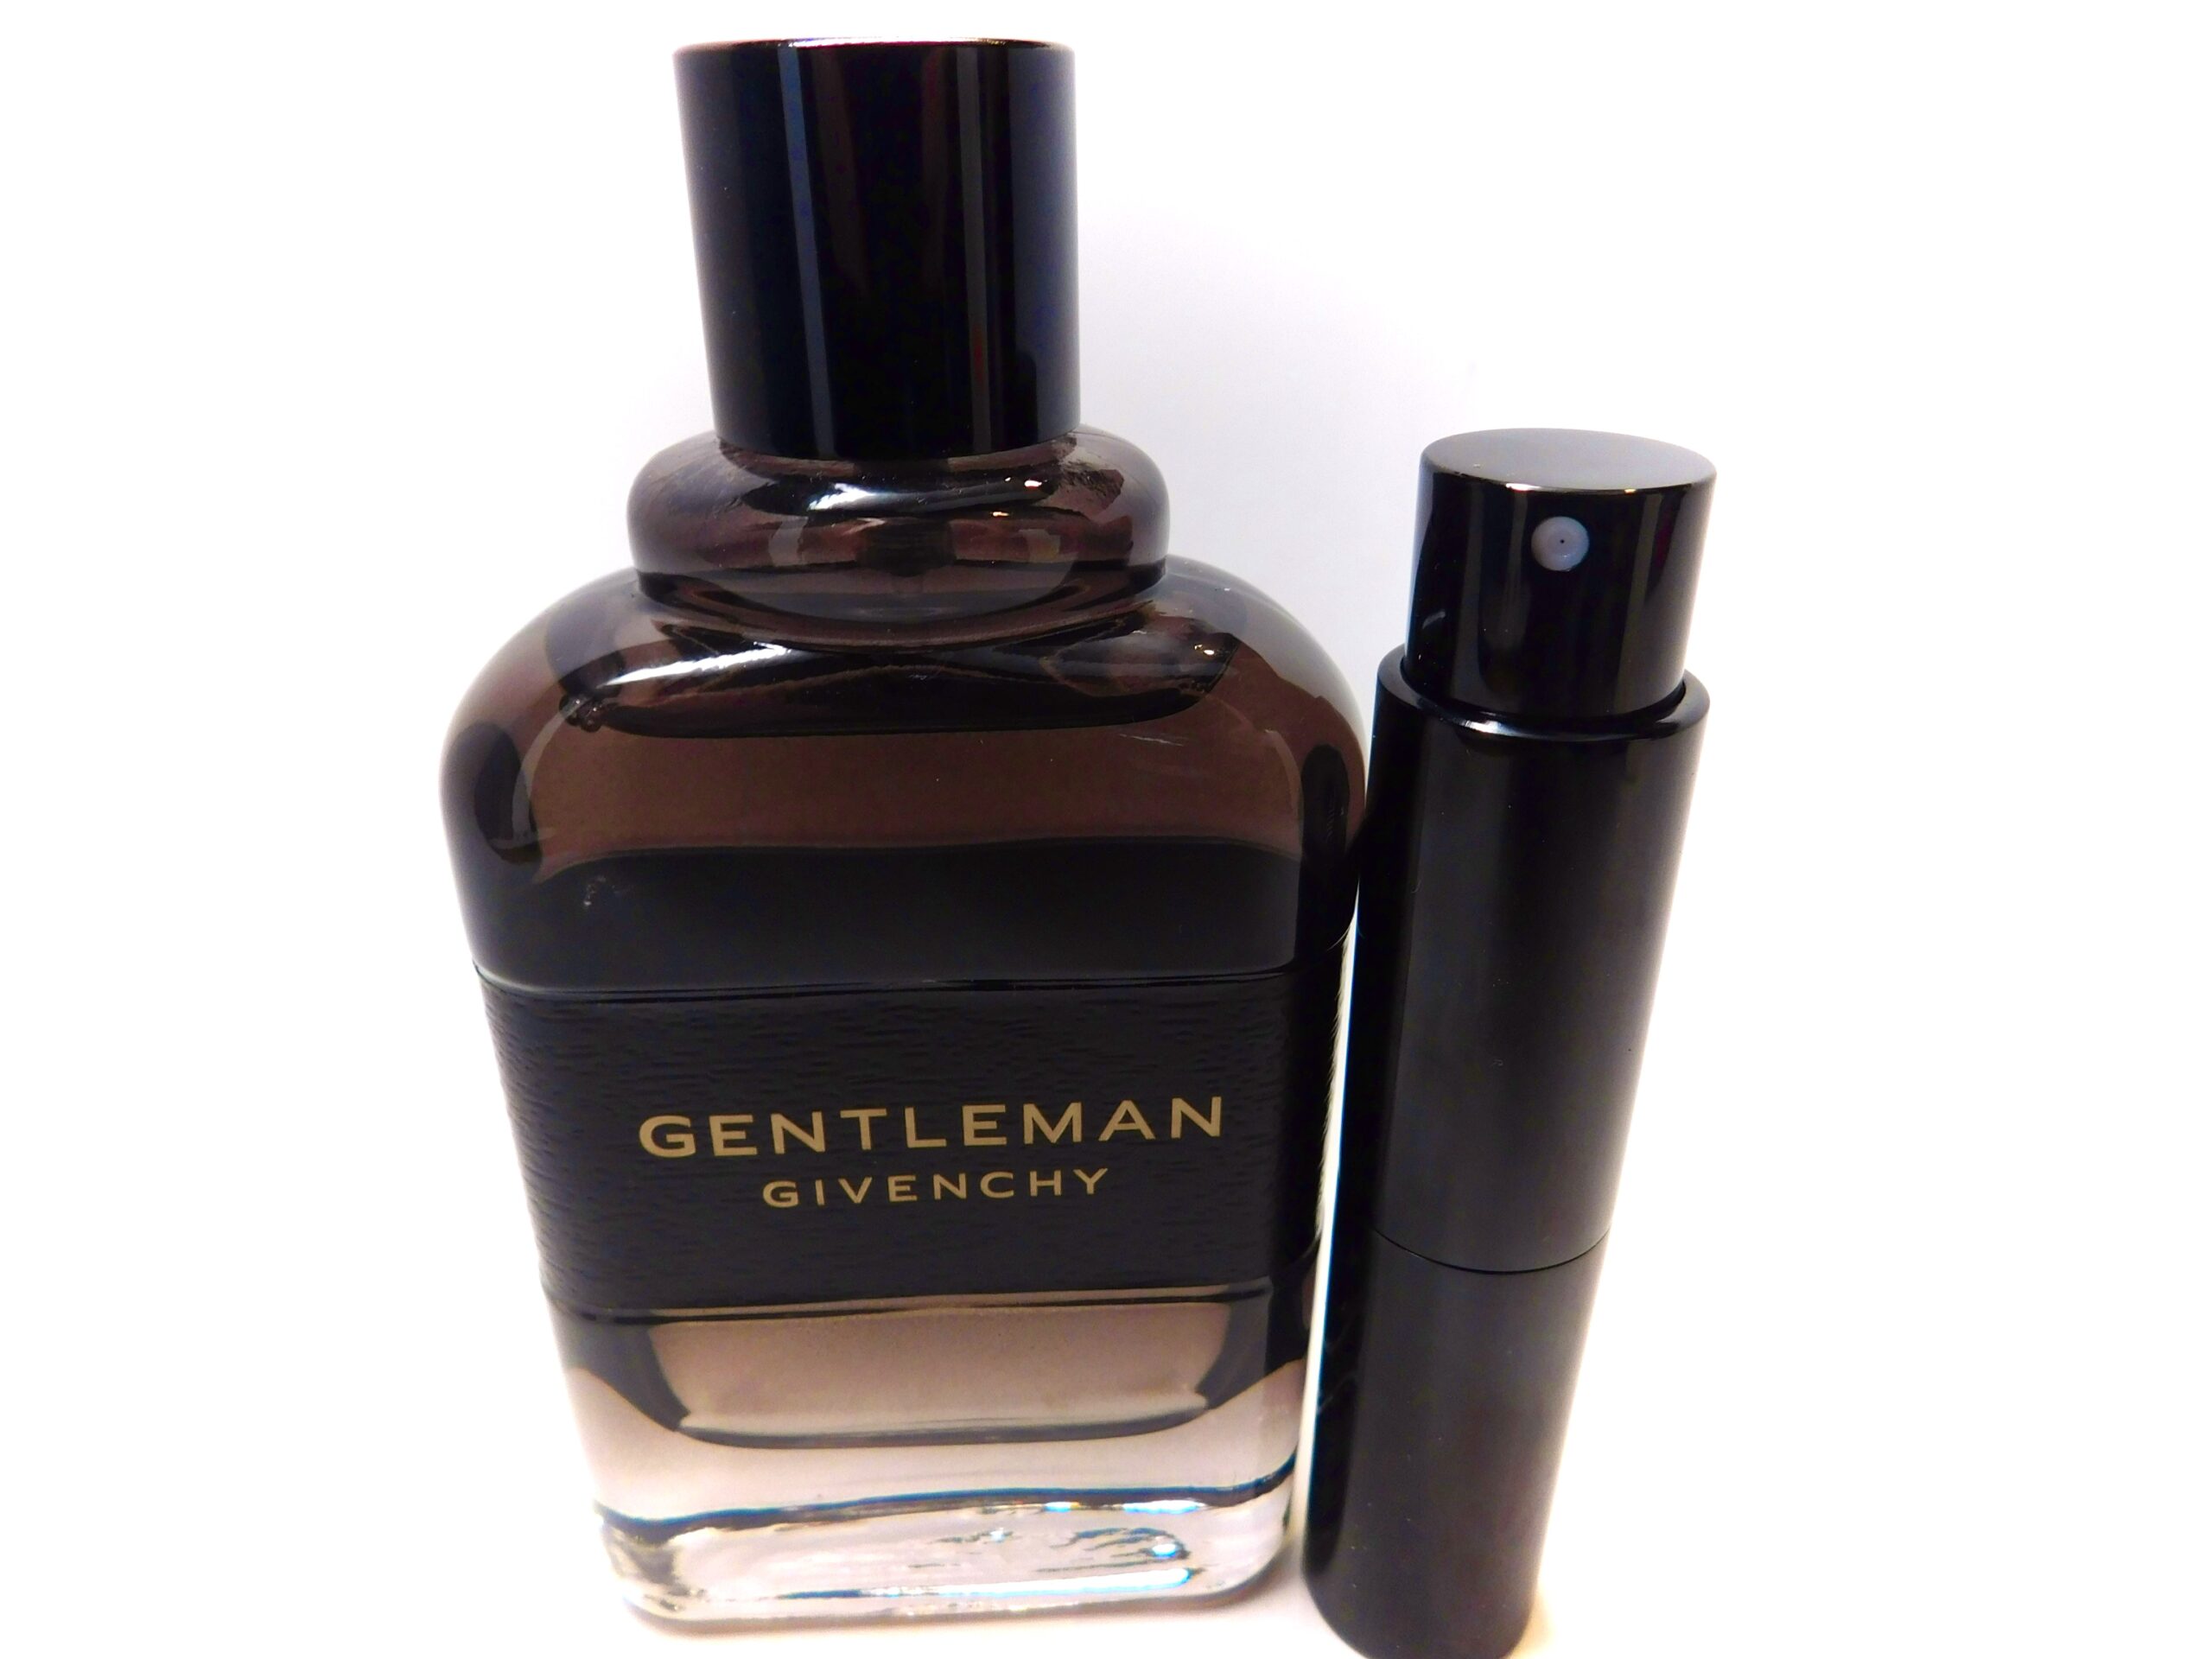 Gentlemen boisee. Givenchy Gentleman Boisee. Givenchy Gentleman Eau de Parfum Boisee. Gentleman Boisee EDP 12.5ml. 12,5 Ml Givenchy Gentleman Eau de Parfum Boisee.